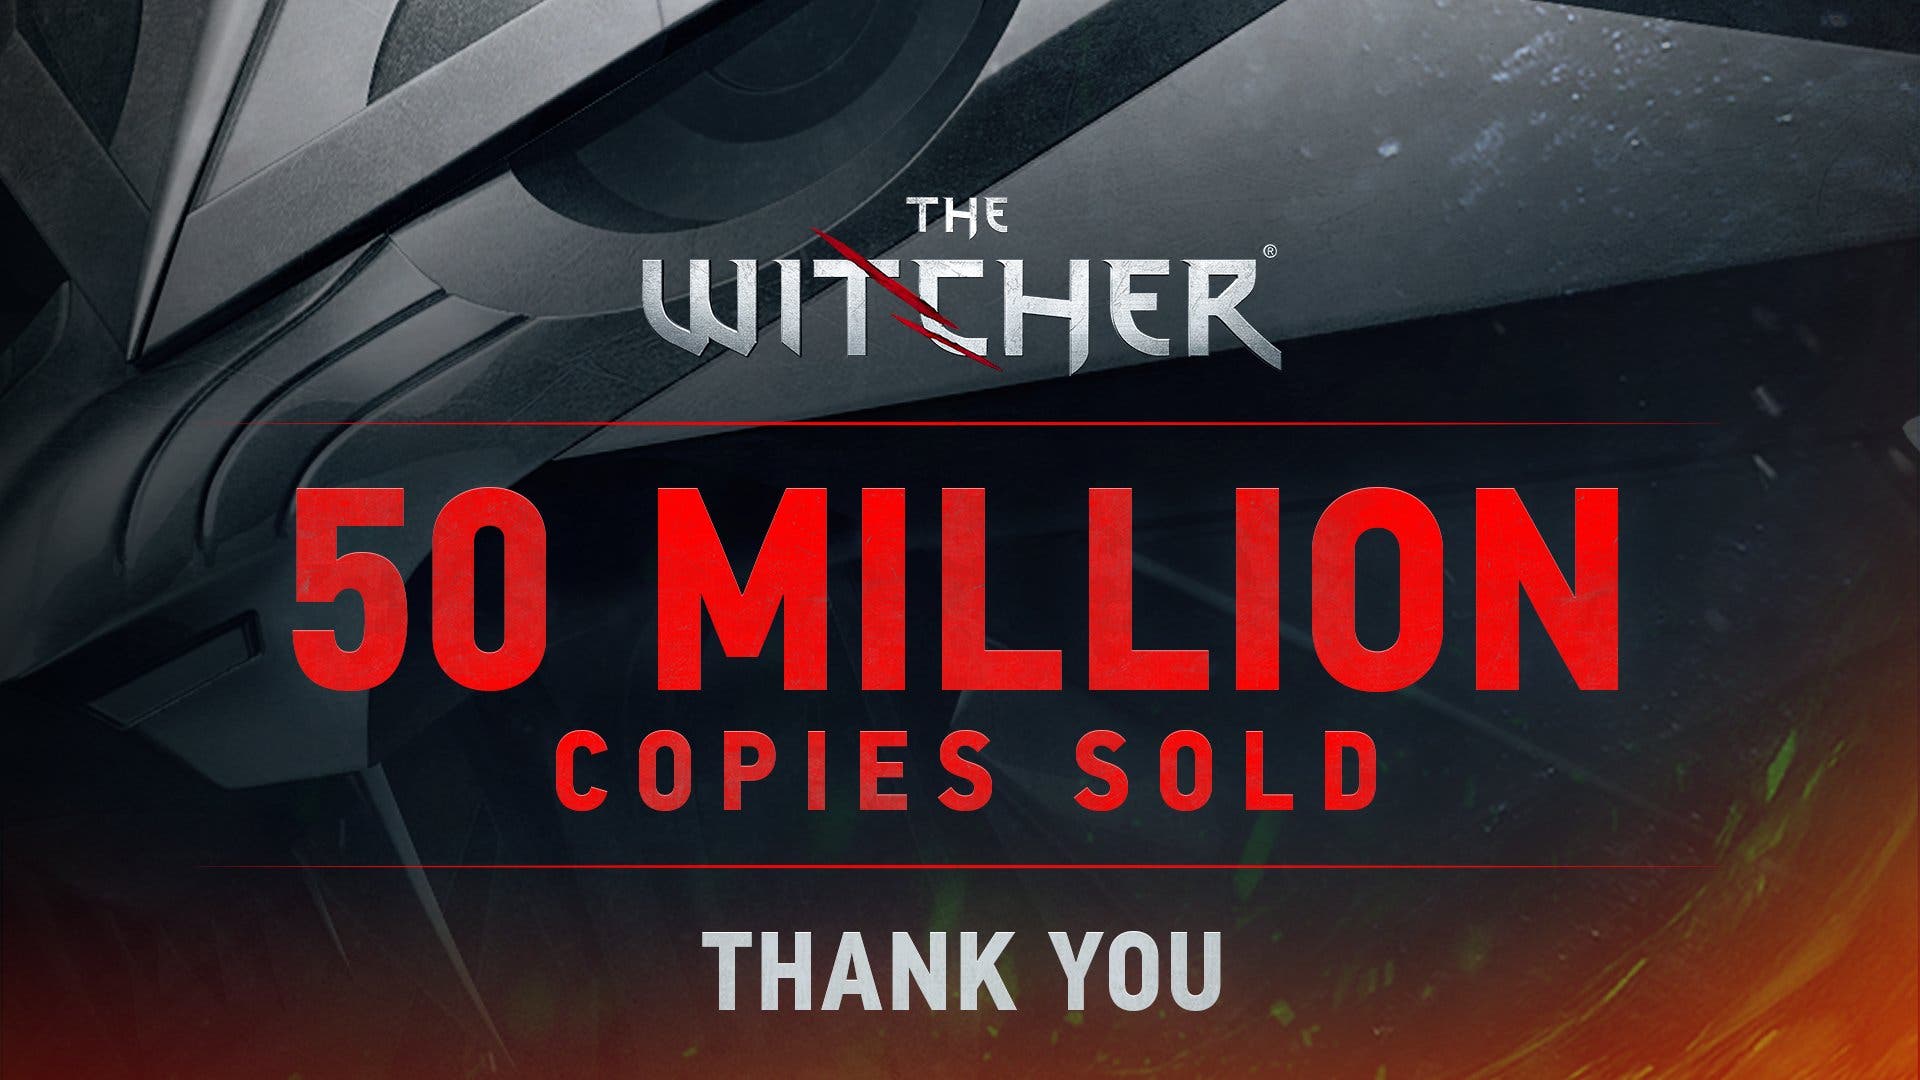 La franquicia The Witcher ya acumula más de 50 millones de copias vendidas